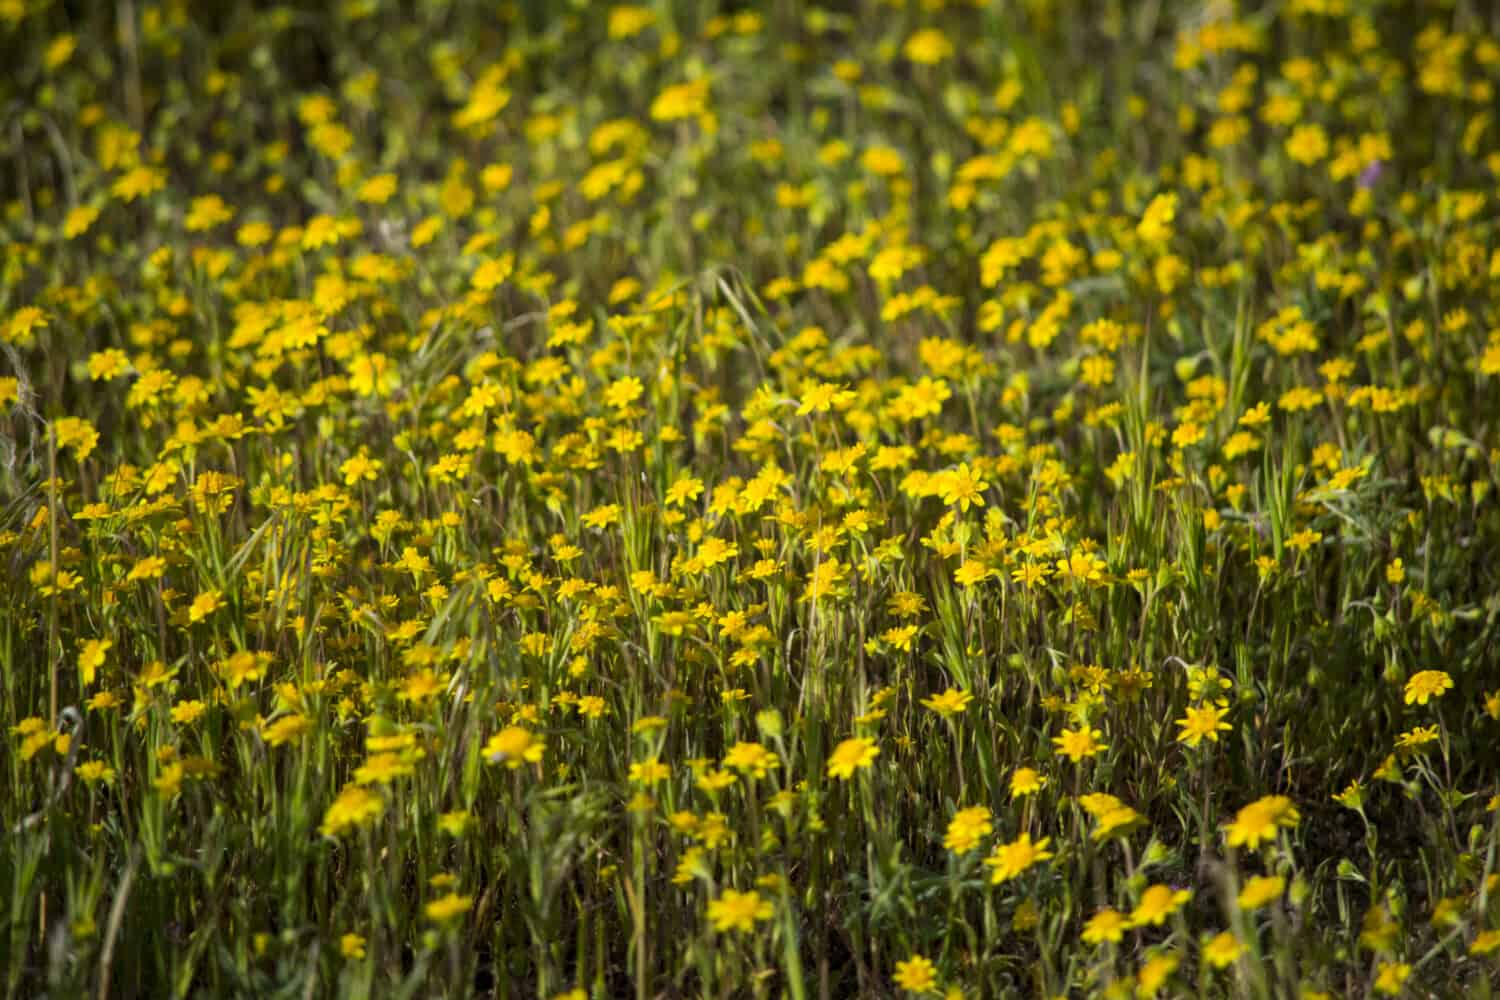 Goldfields (Lasthenia californica) at Antelope Valley Poppy Reserve March 2017